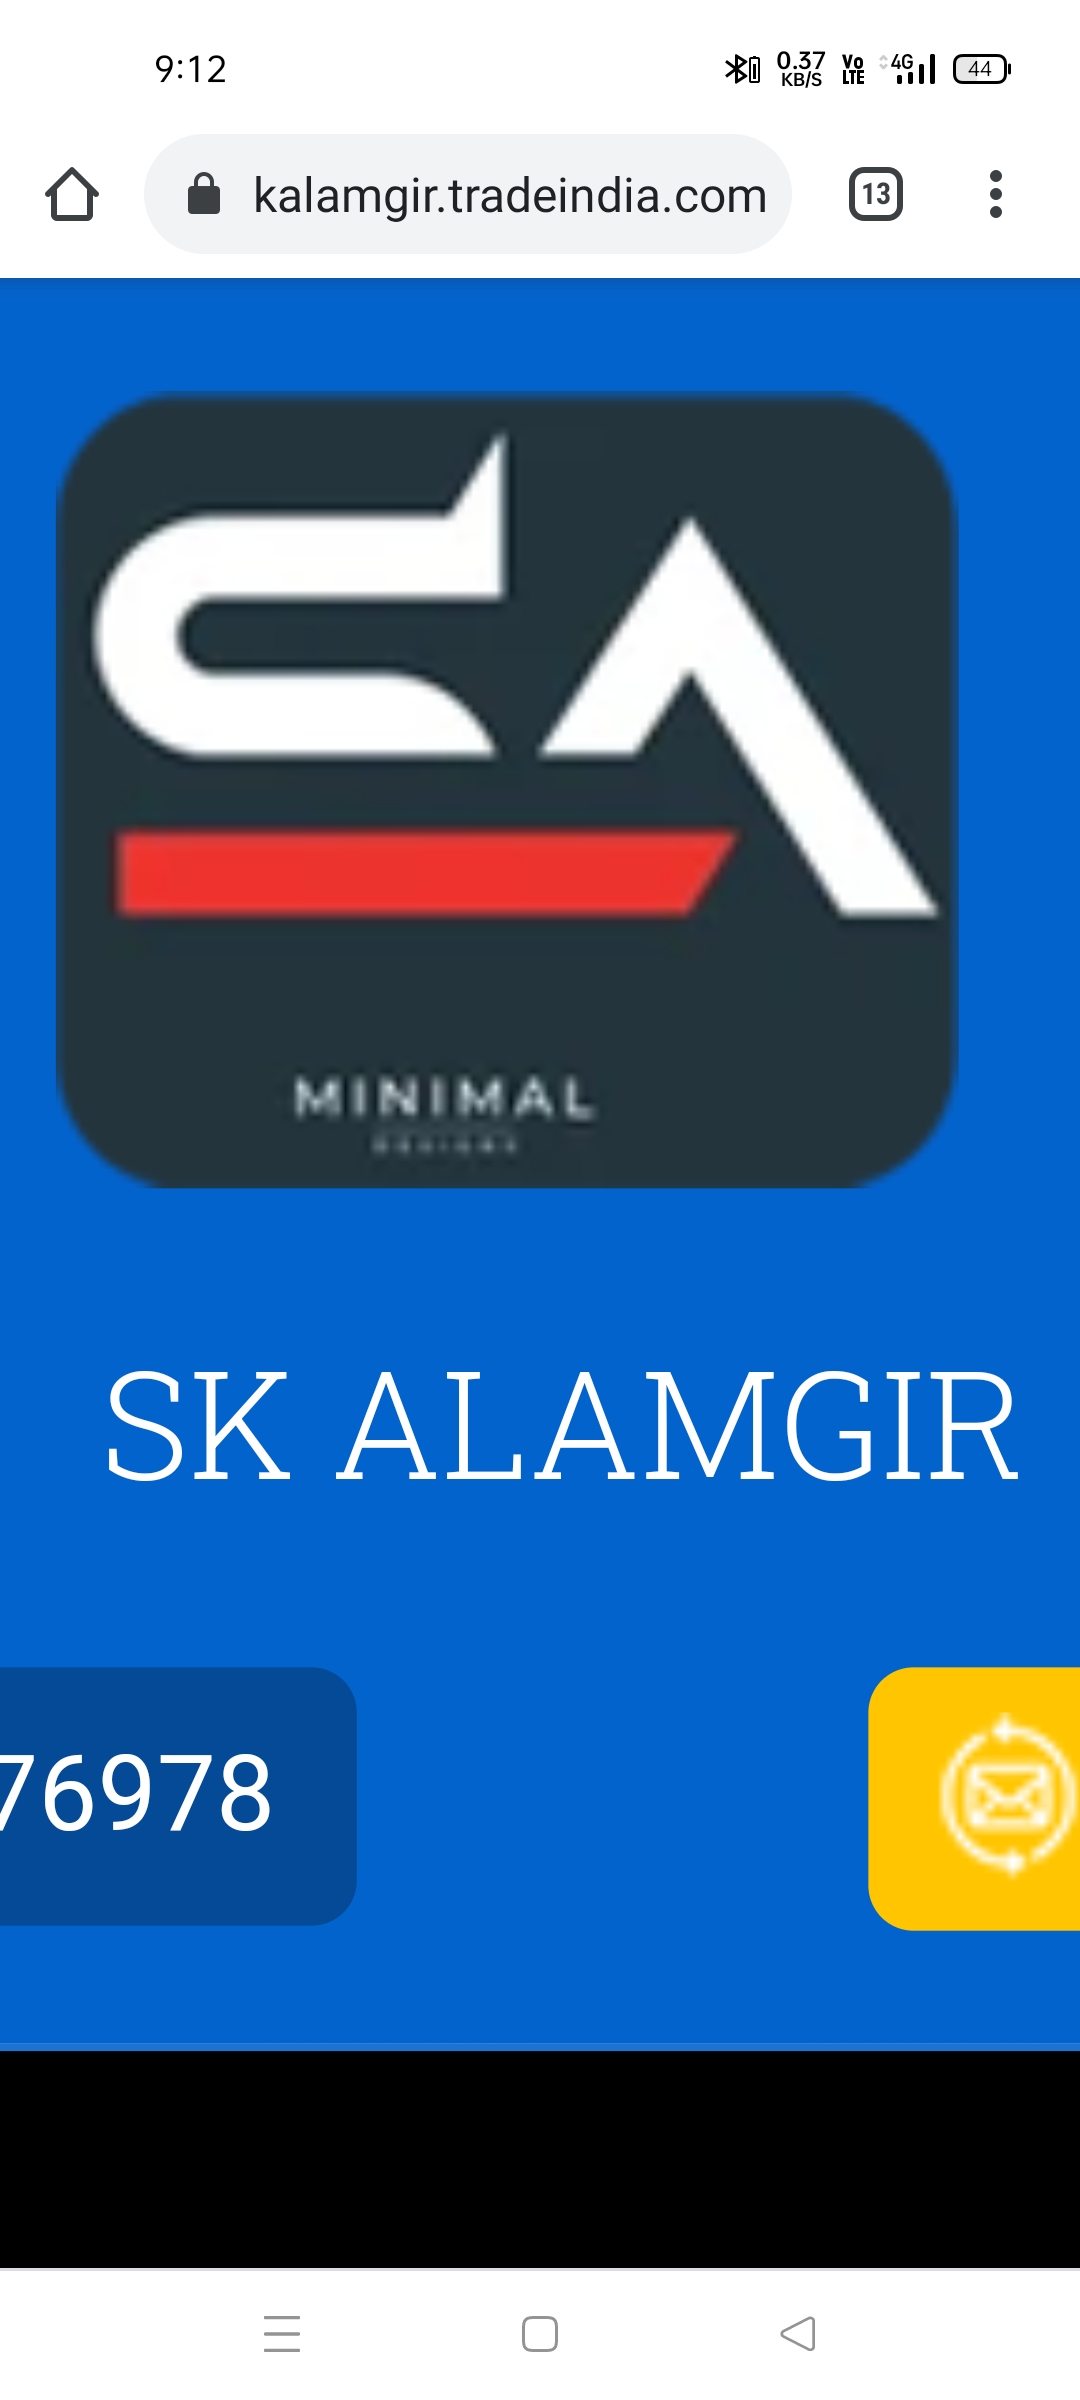 SK ALAMGIR